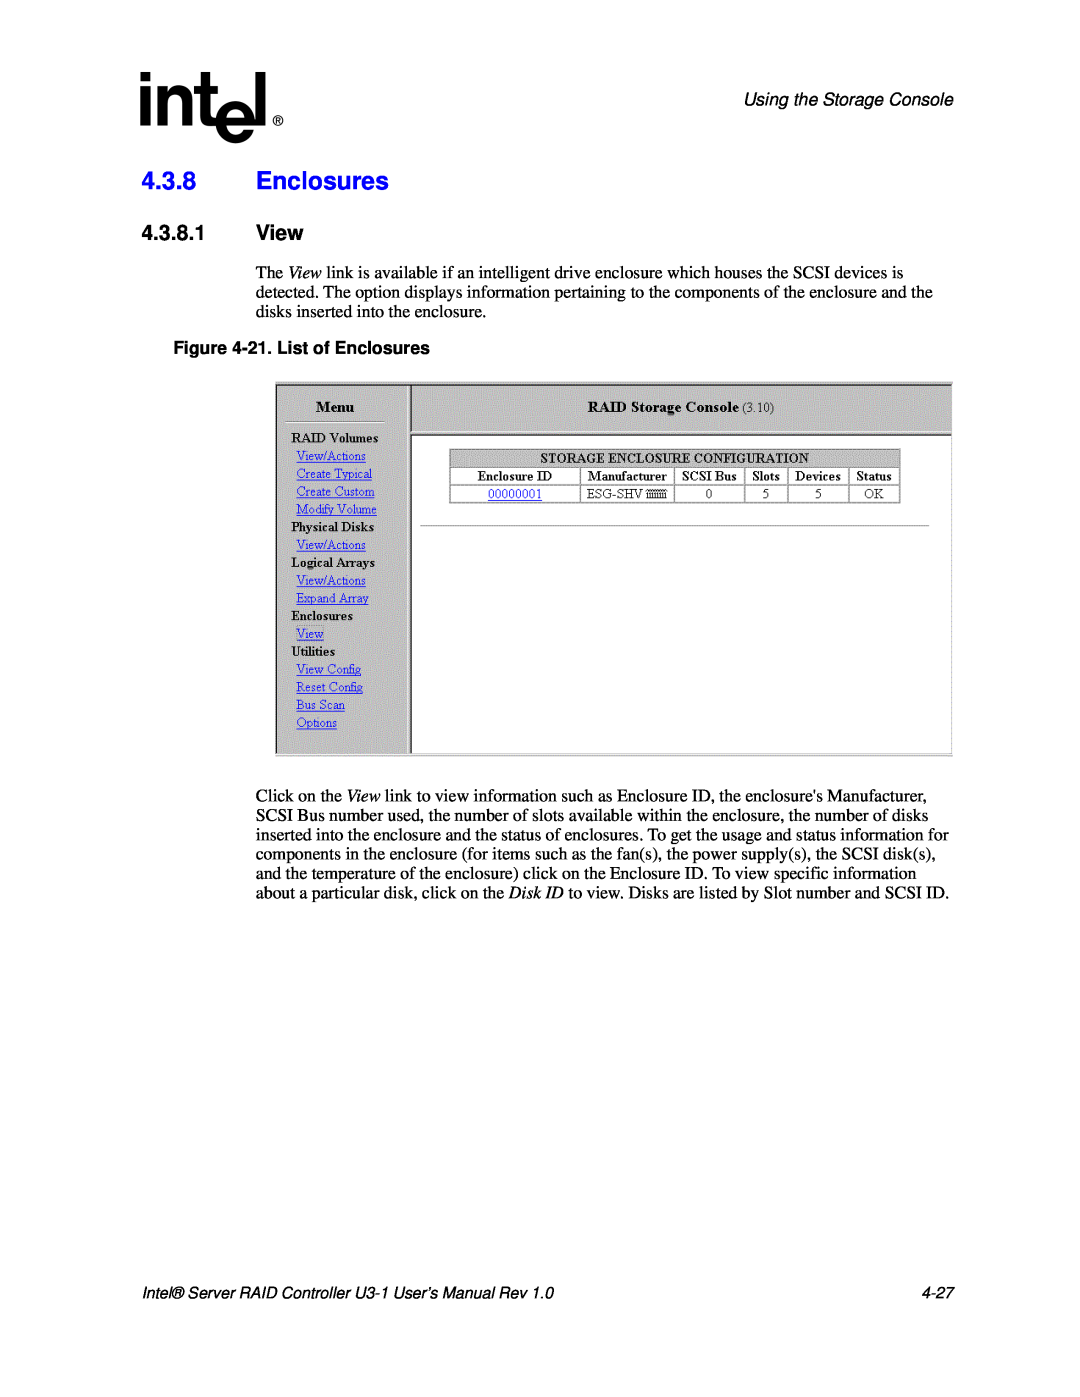 Intel SRCU31 user manual 4.3.8Enclosures, 4.3.8.1View, Using the Storage Console, 21.List of Enclosures, 4-27 